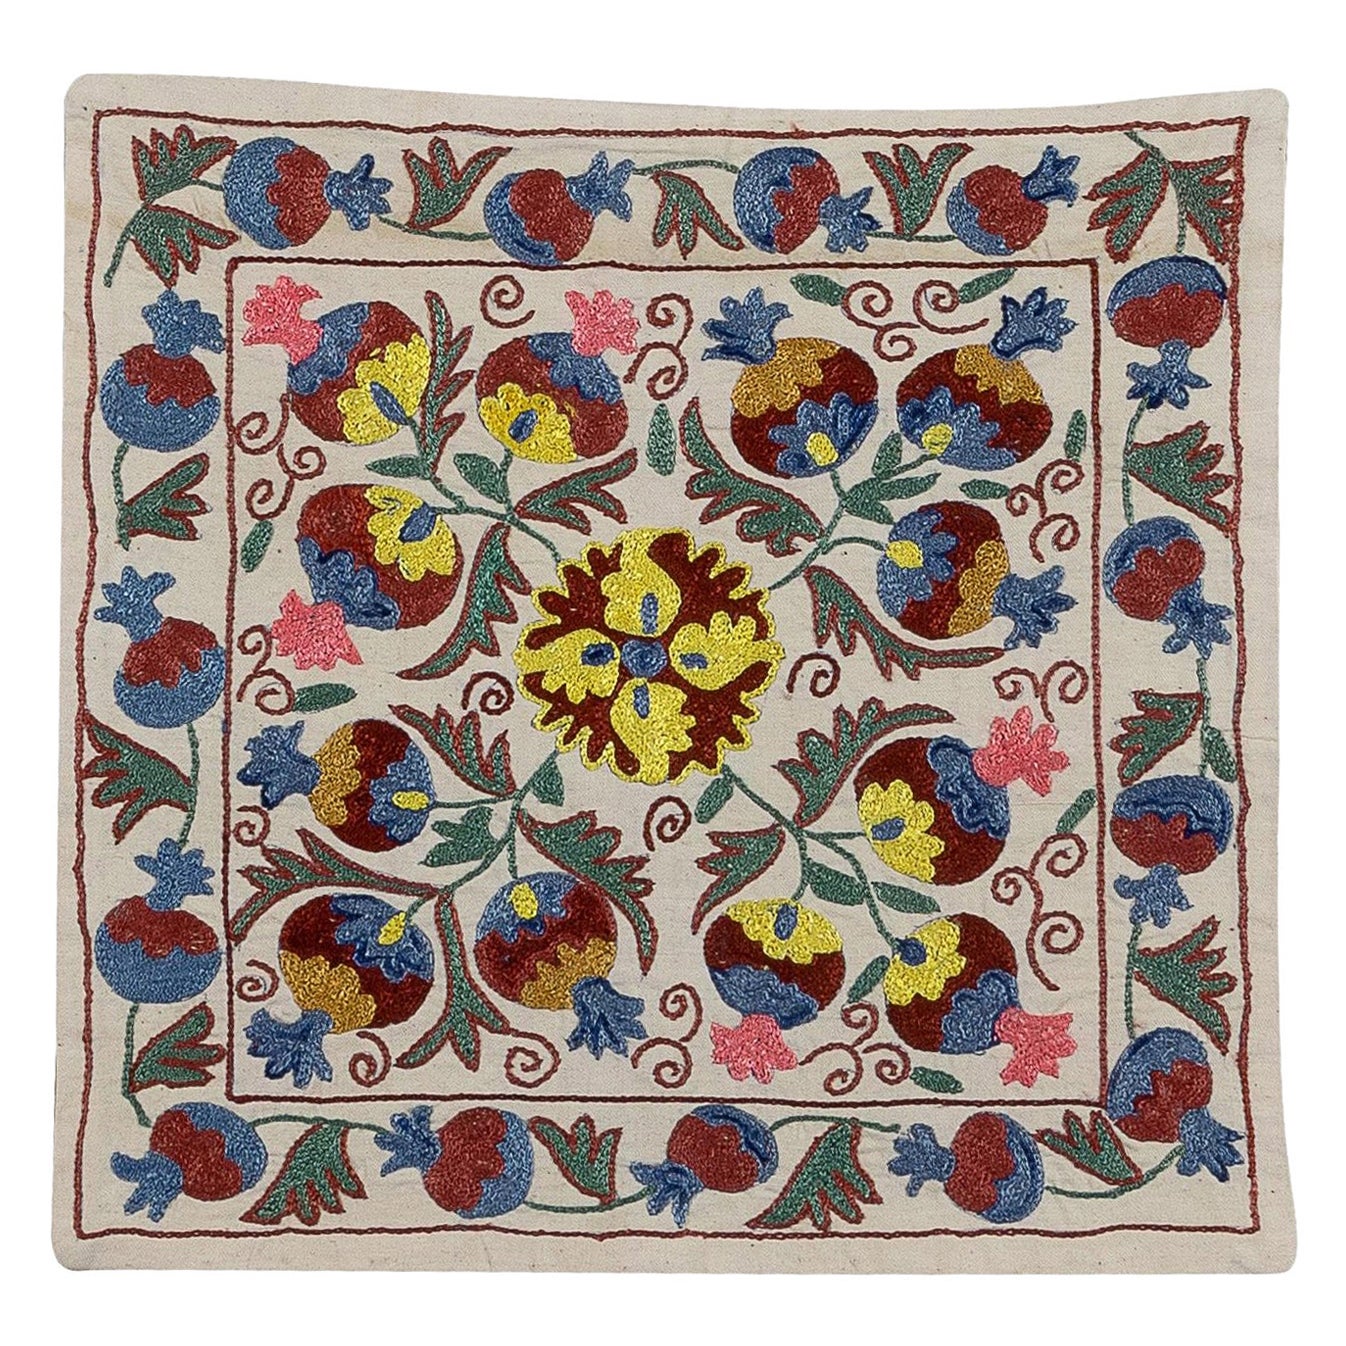 18"x19'' Decorative Uzbek Suzani Cushion Cover, Silk Embroidery Pillow Cover